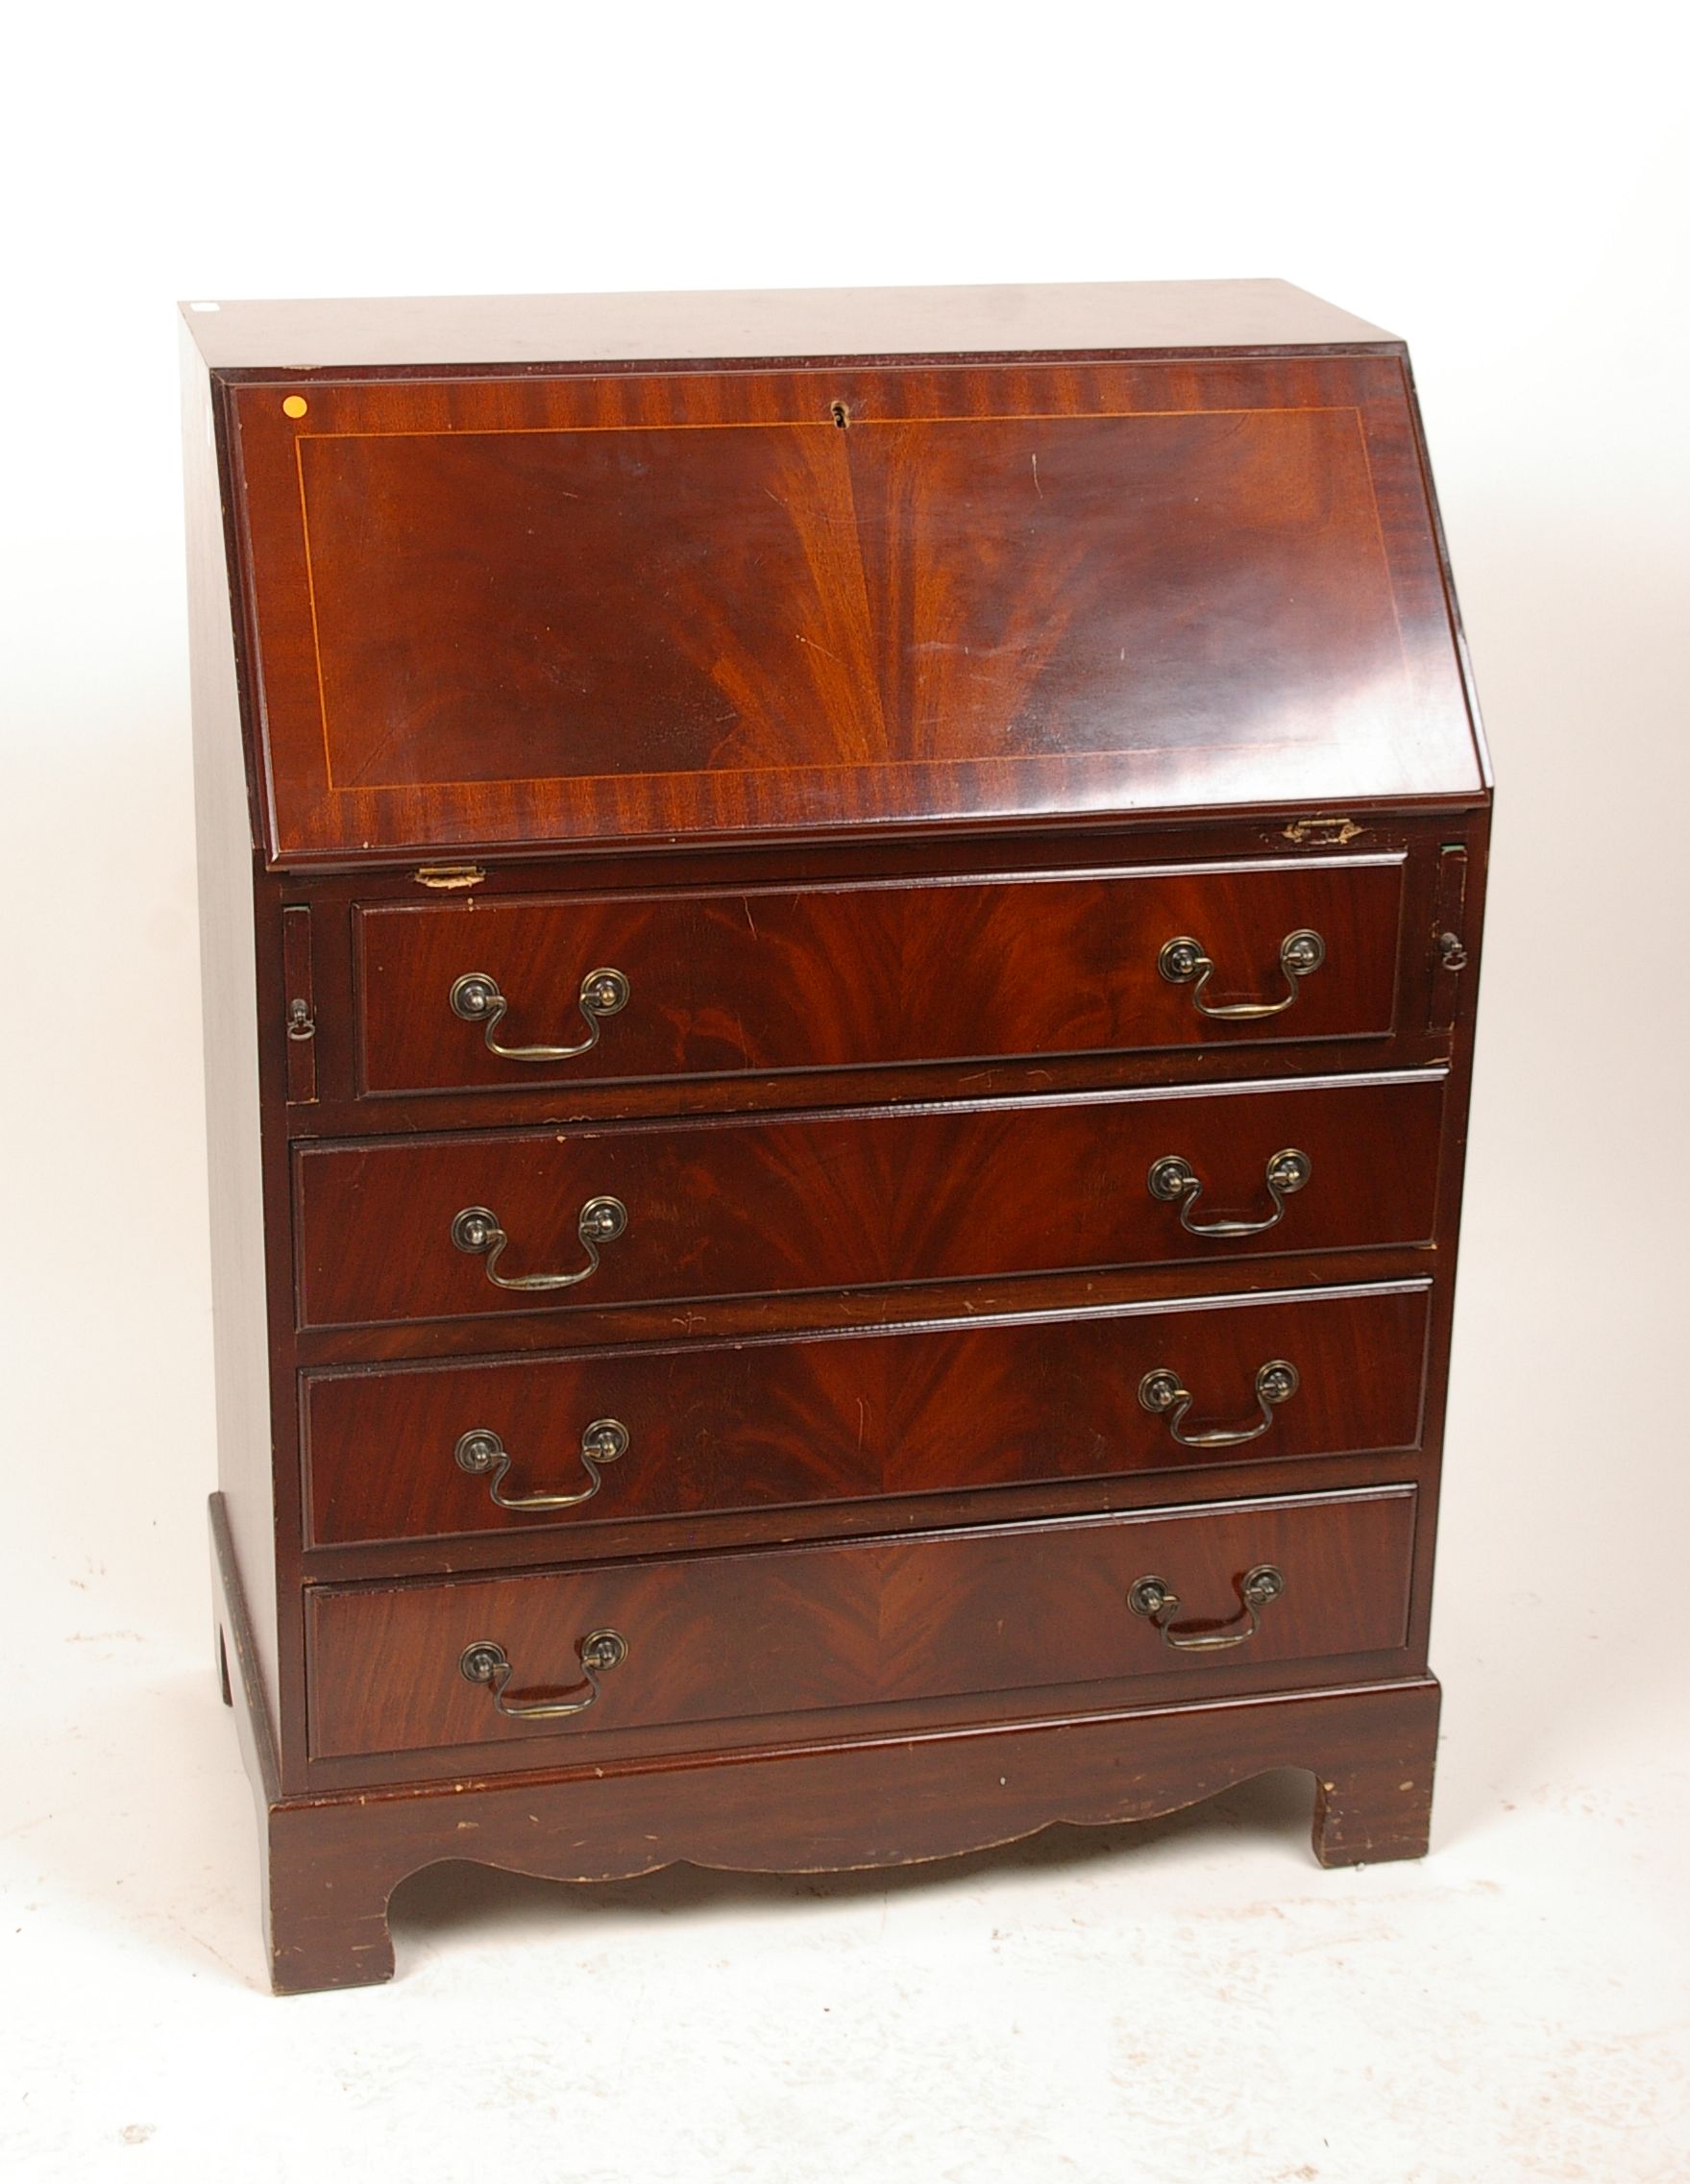 A George III style mahogany bureau with four graduated drawers on bracket feet 99cm high, 75cm wide